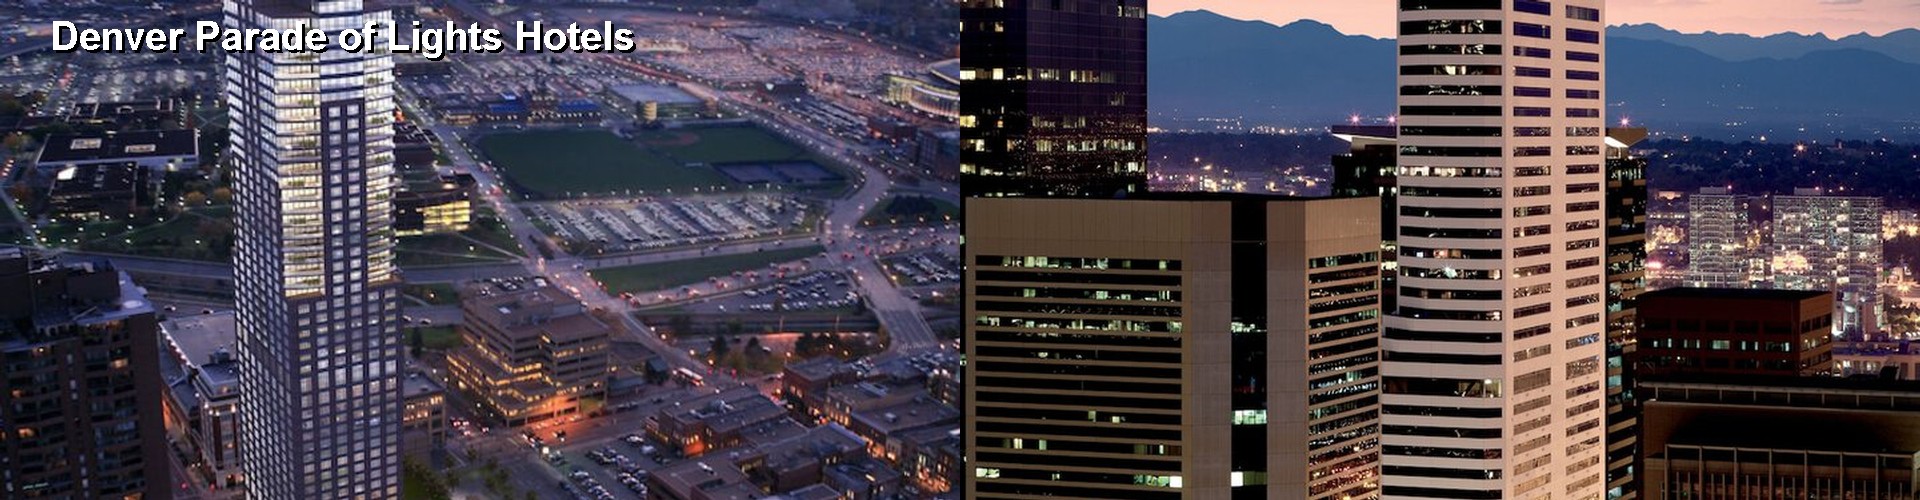 4 Best Hotels near Denver Parade of Lights